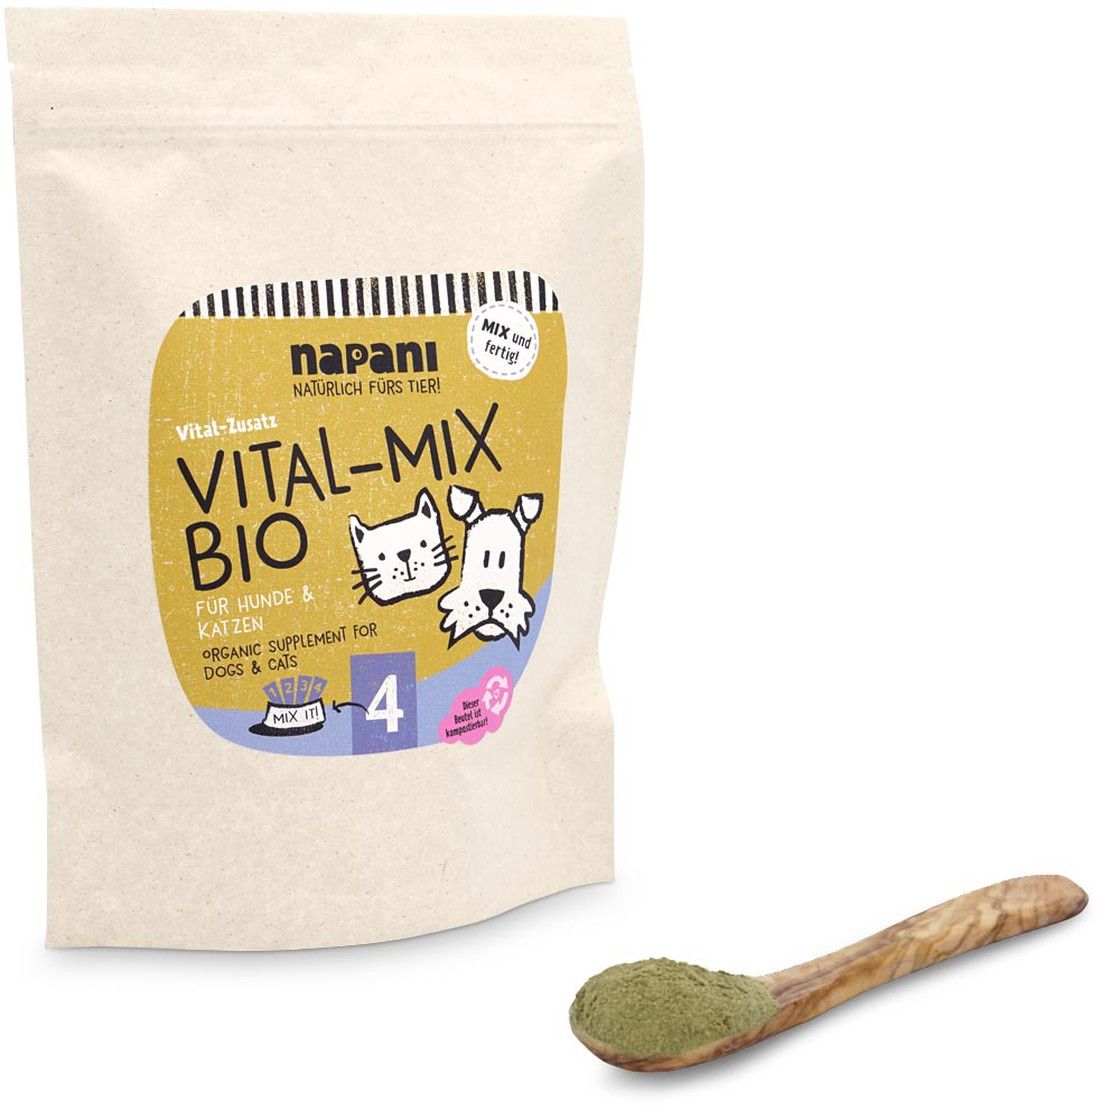 Napani Vitalmix bio, Ergänzungsfuttermittel für Hunde & Katzen